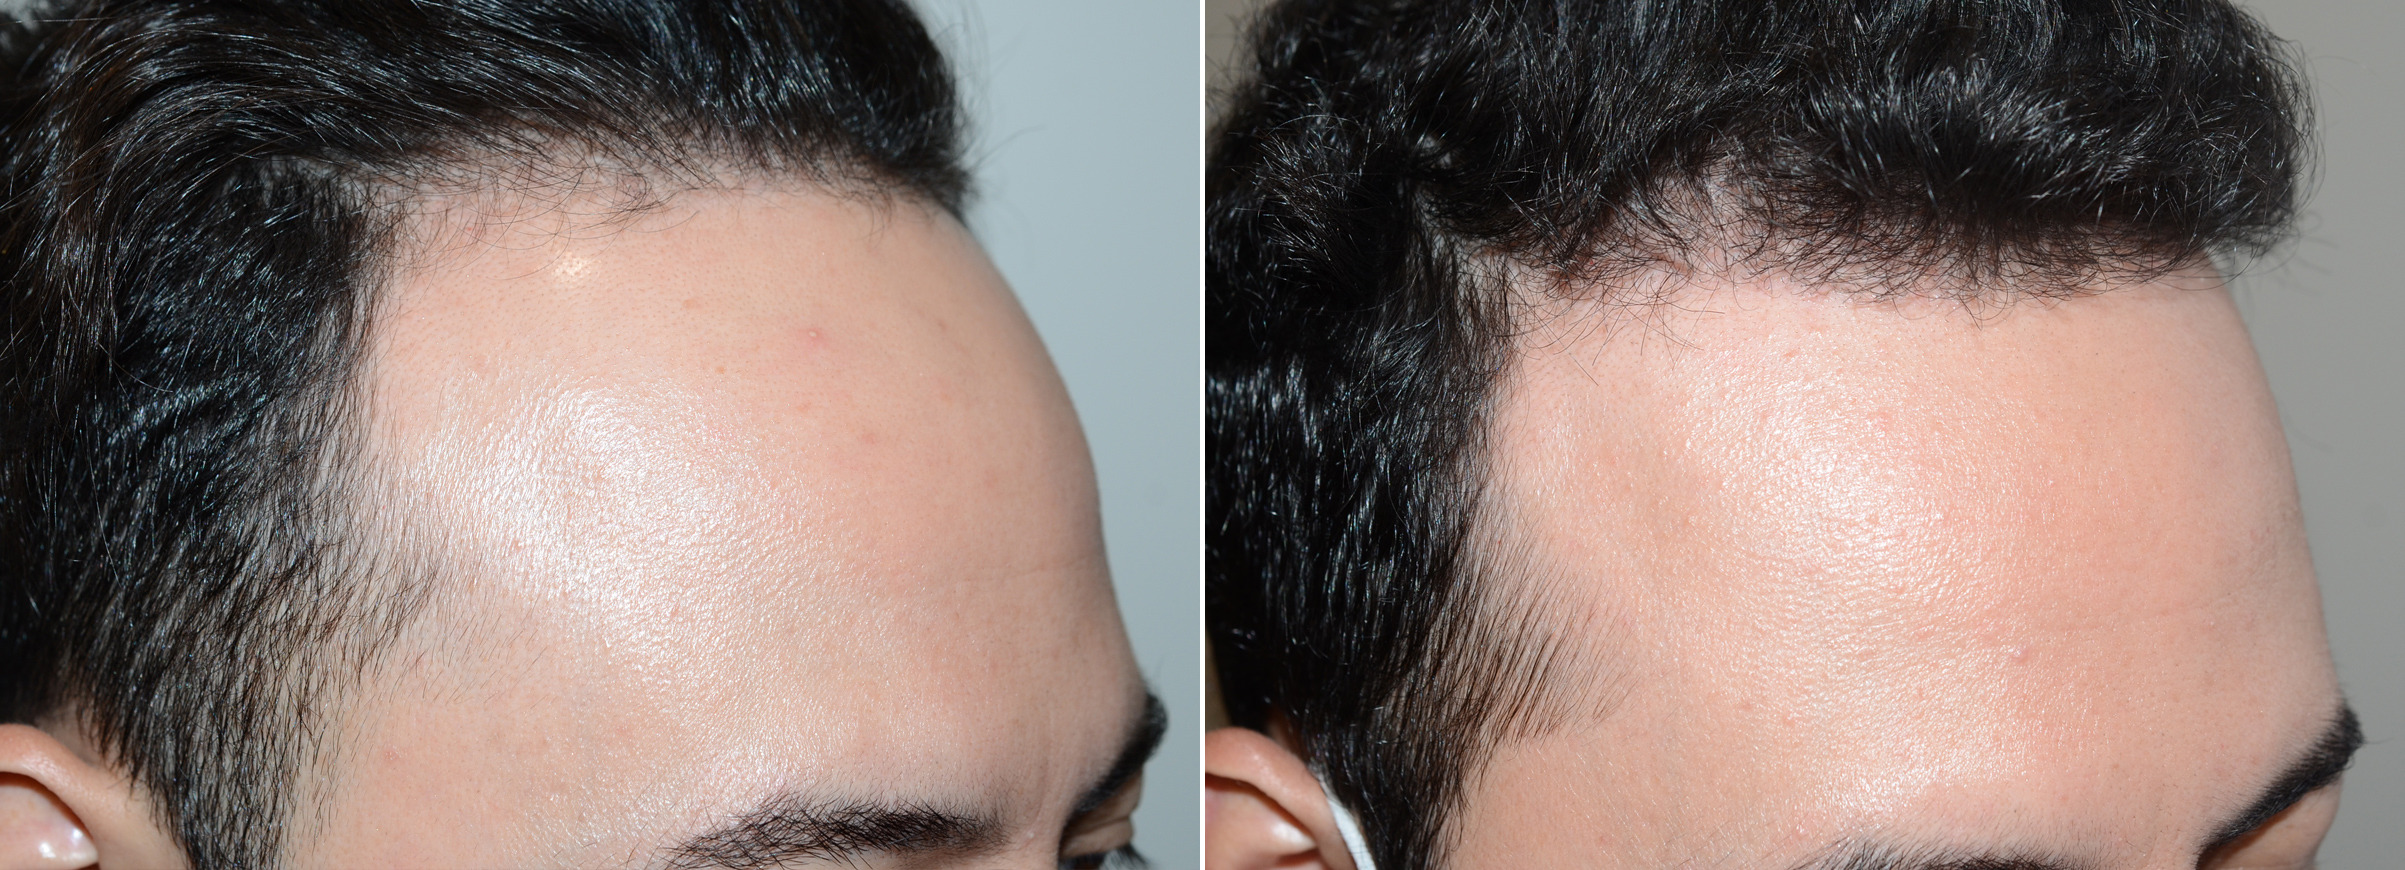 Hair Transplants For Men Pictures Miami Fl Paciente 109730